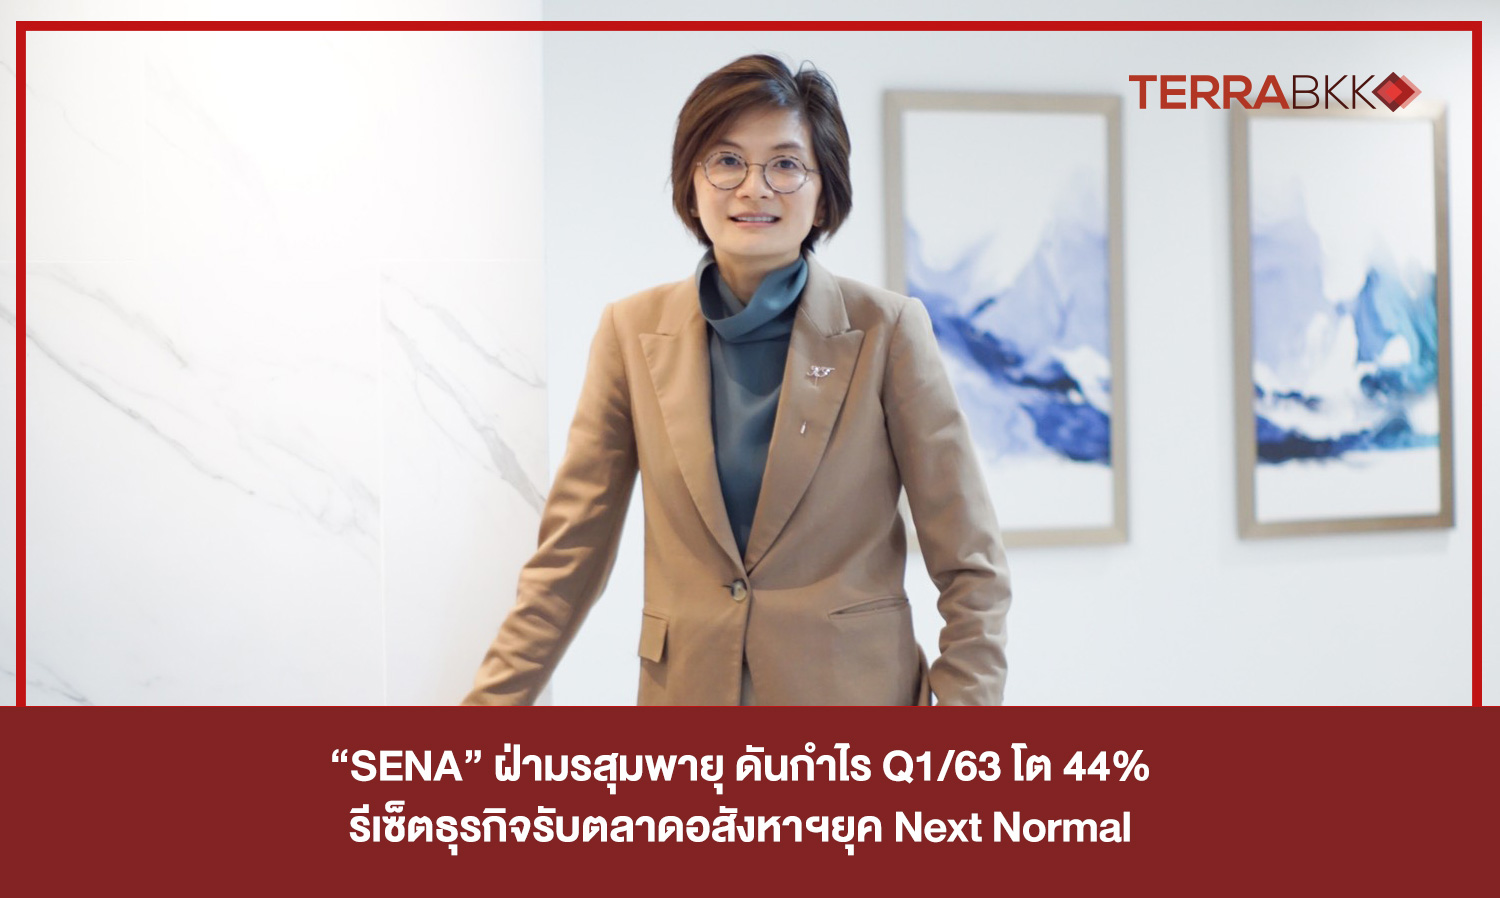 “SENA” ฝ่ามรสุมพายุ ดันกำไร Q1/63 โต 44% รีเซ็ตธุรกิจรับตลาดอสังหาฯยุค Next Normal